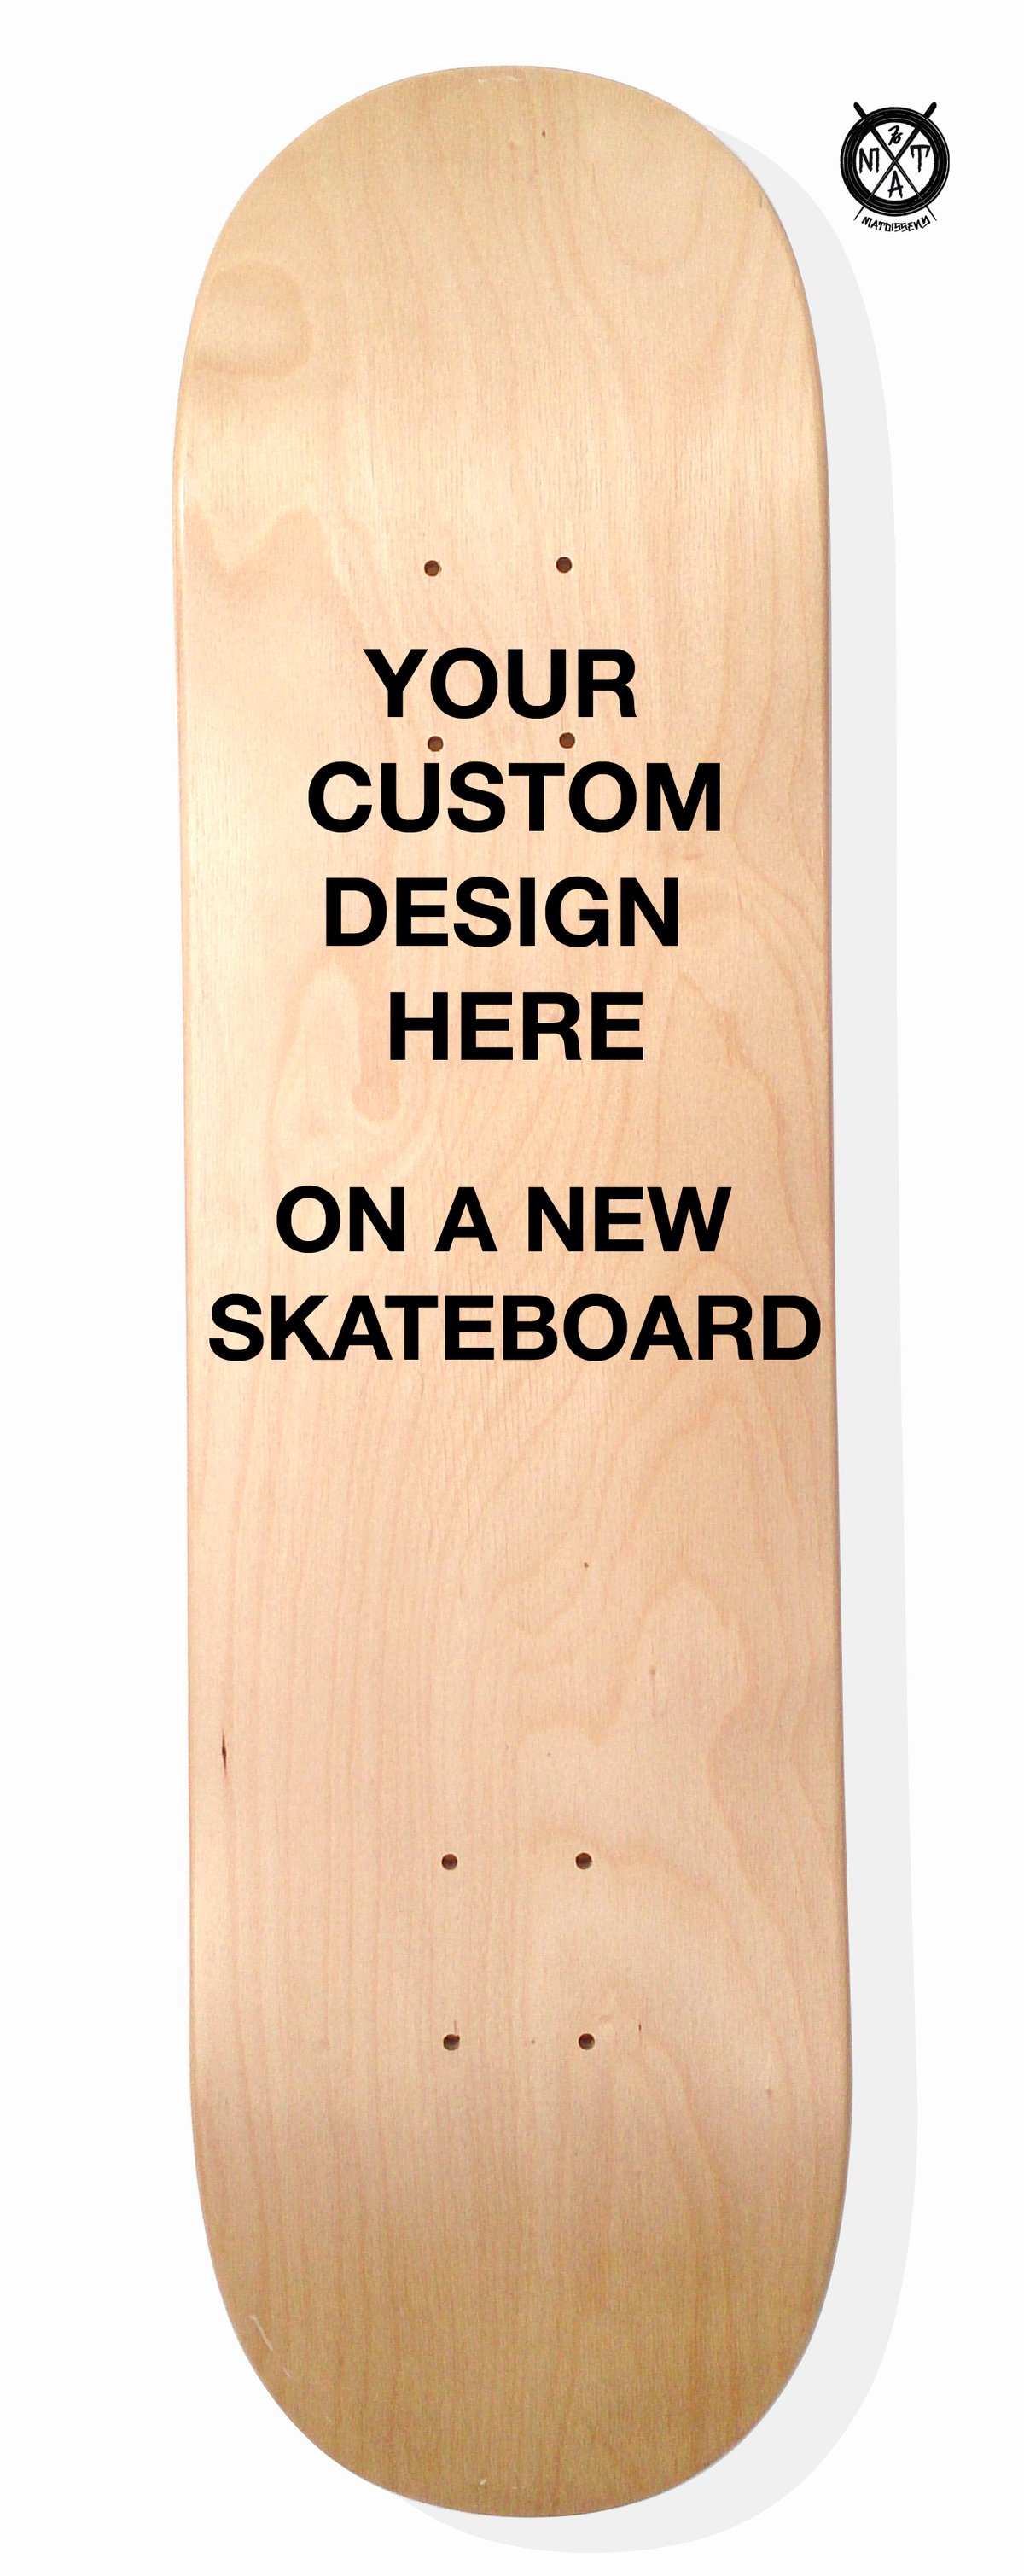 Image of Skate Art (Commision Artwork on a New Skateboard) by @matdisseny